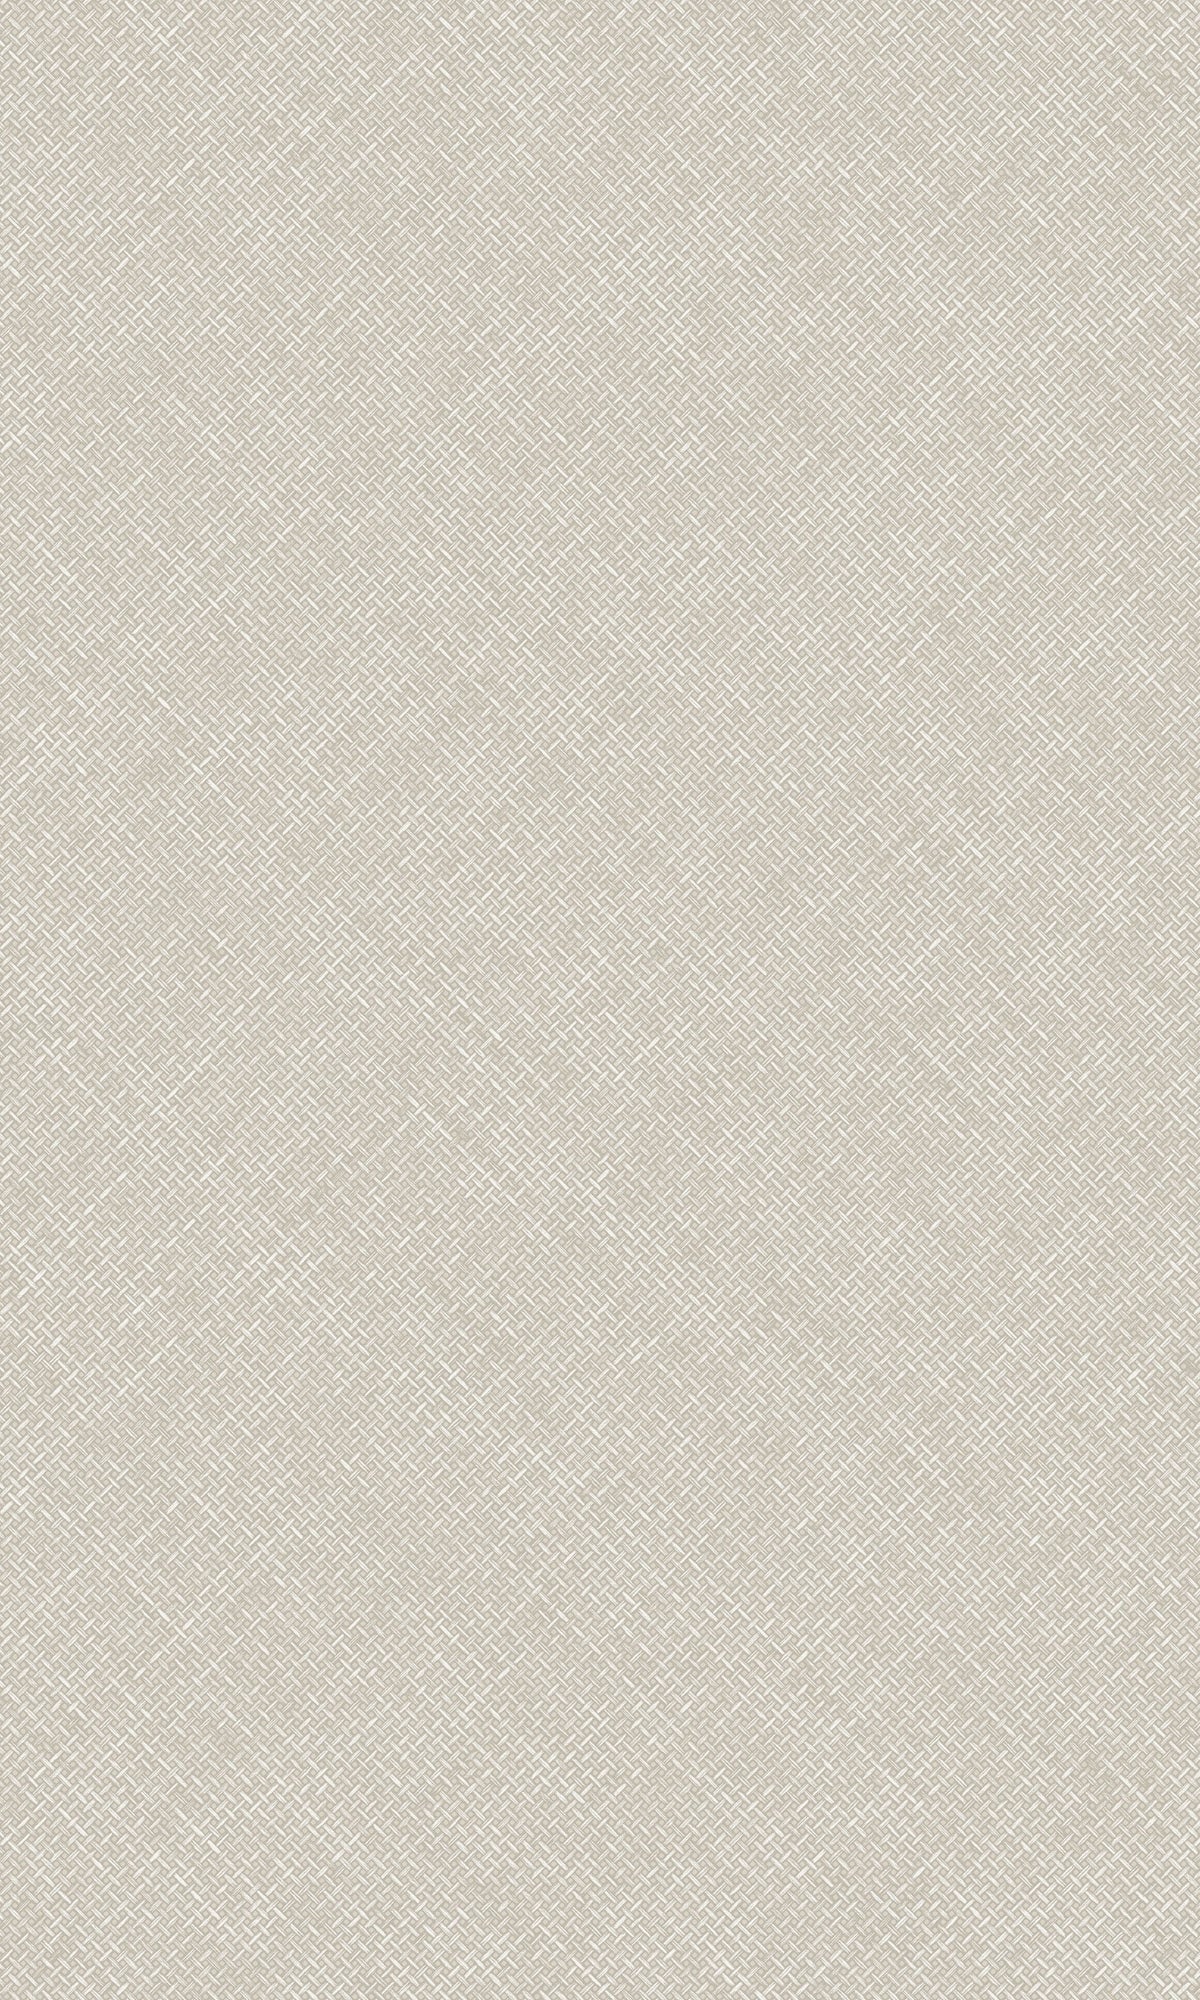 Beige Plain Textured Textile Wallpaper R9223